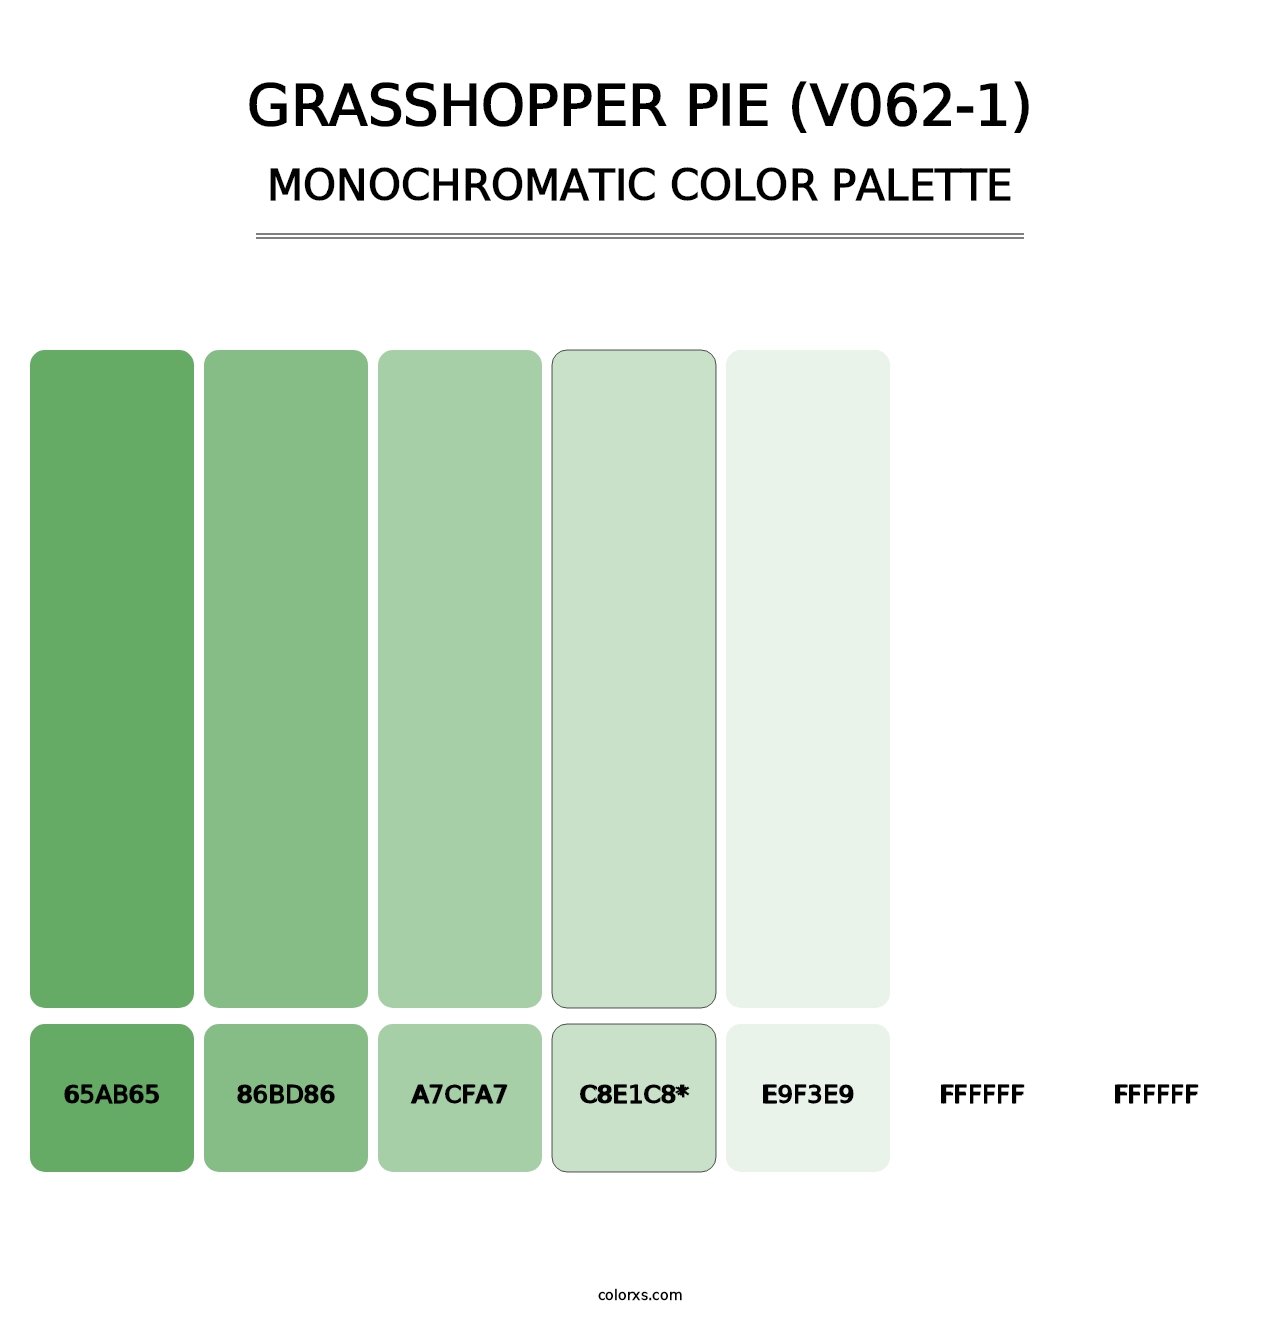 Grasshopper Pie (V062-1) - Monochromatic Color Palette